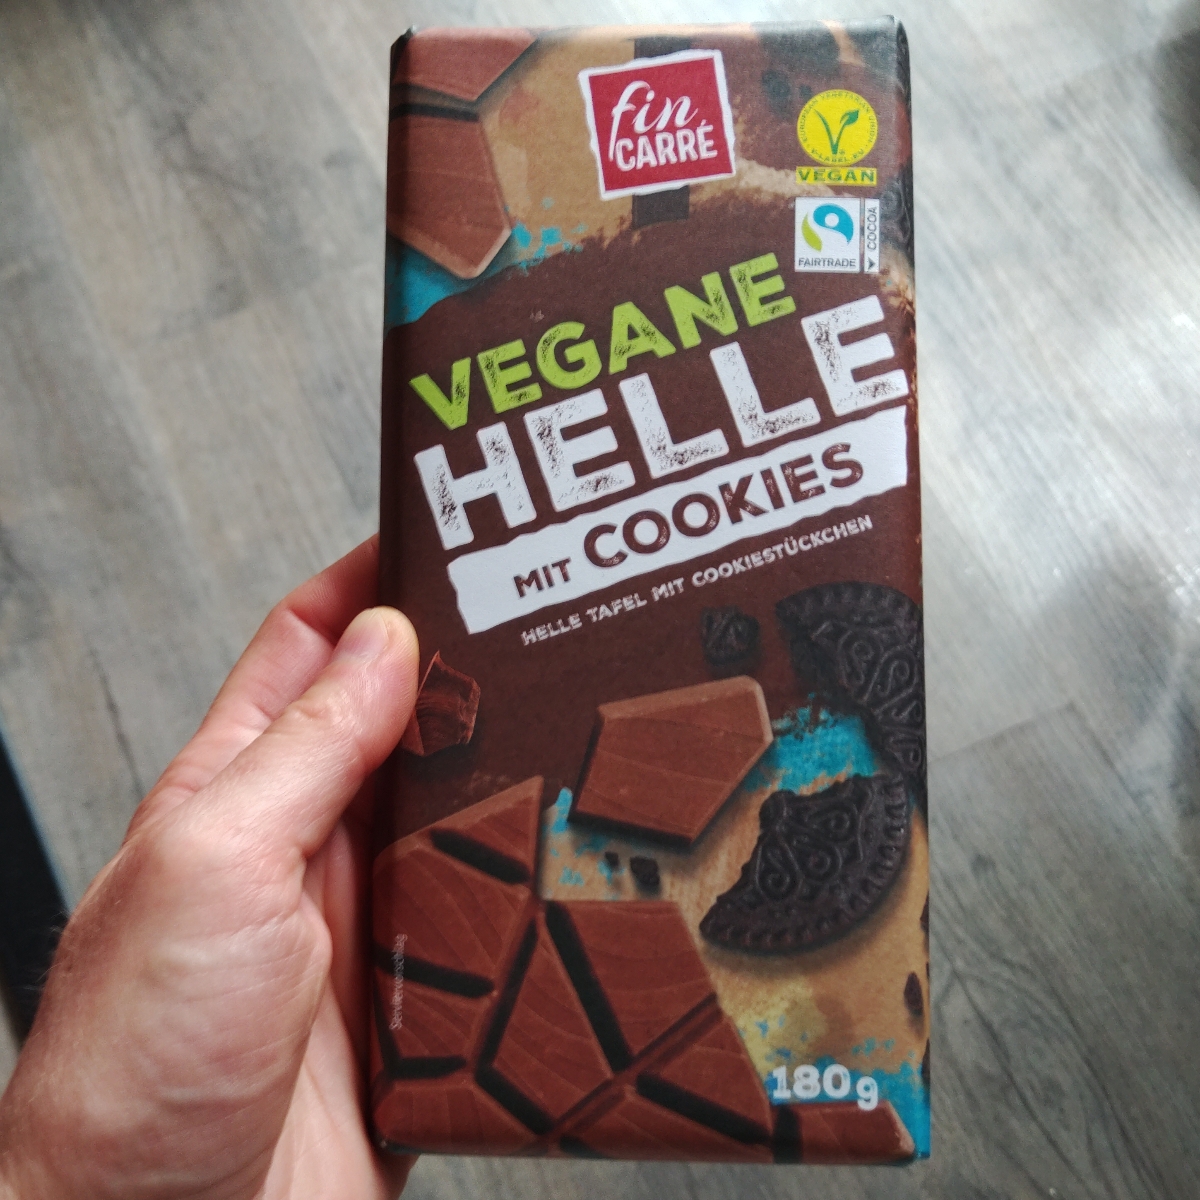 abillion Cookies | Chocolate Fin Carré Reviews